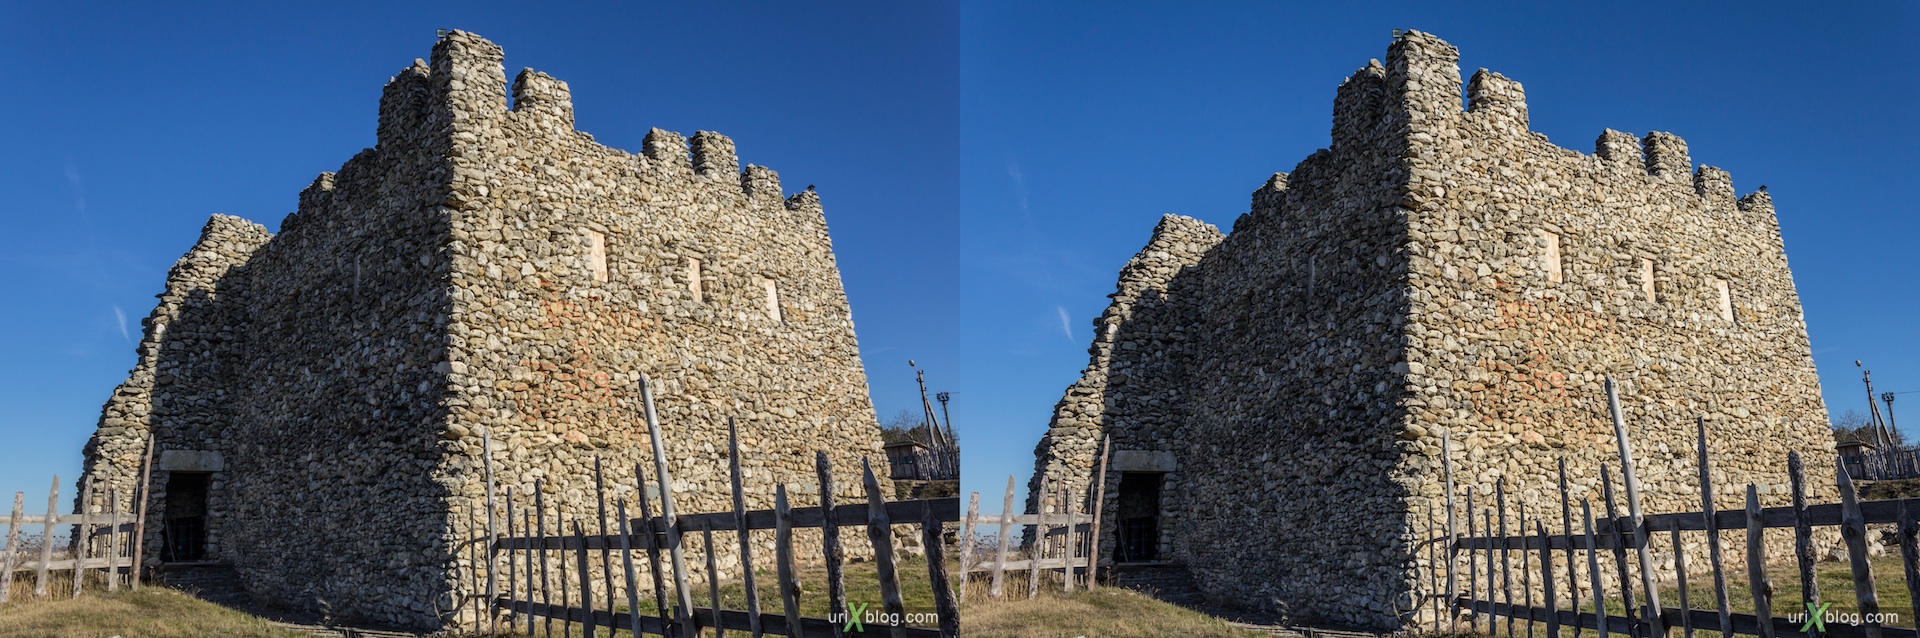 2013, Skiluros tower-mausoleum, Scythian Neapolis, excavations, field, Petrovsky rocks, Simferopol, Crimea, Ukraine, 3D, stereo pair, cross-eyed, crossview, cross view stereo pair